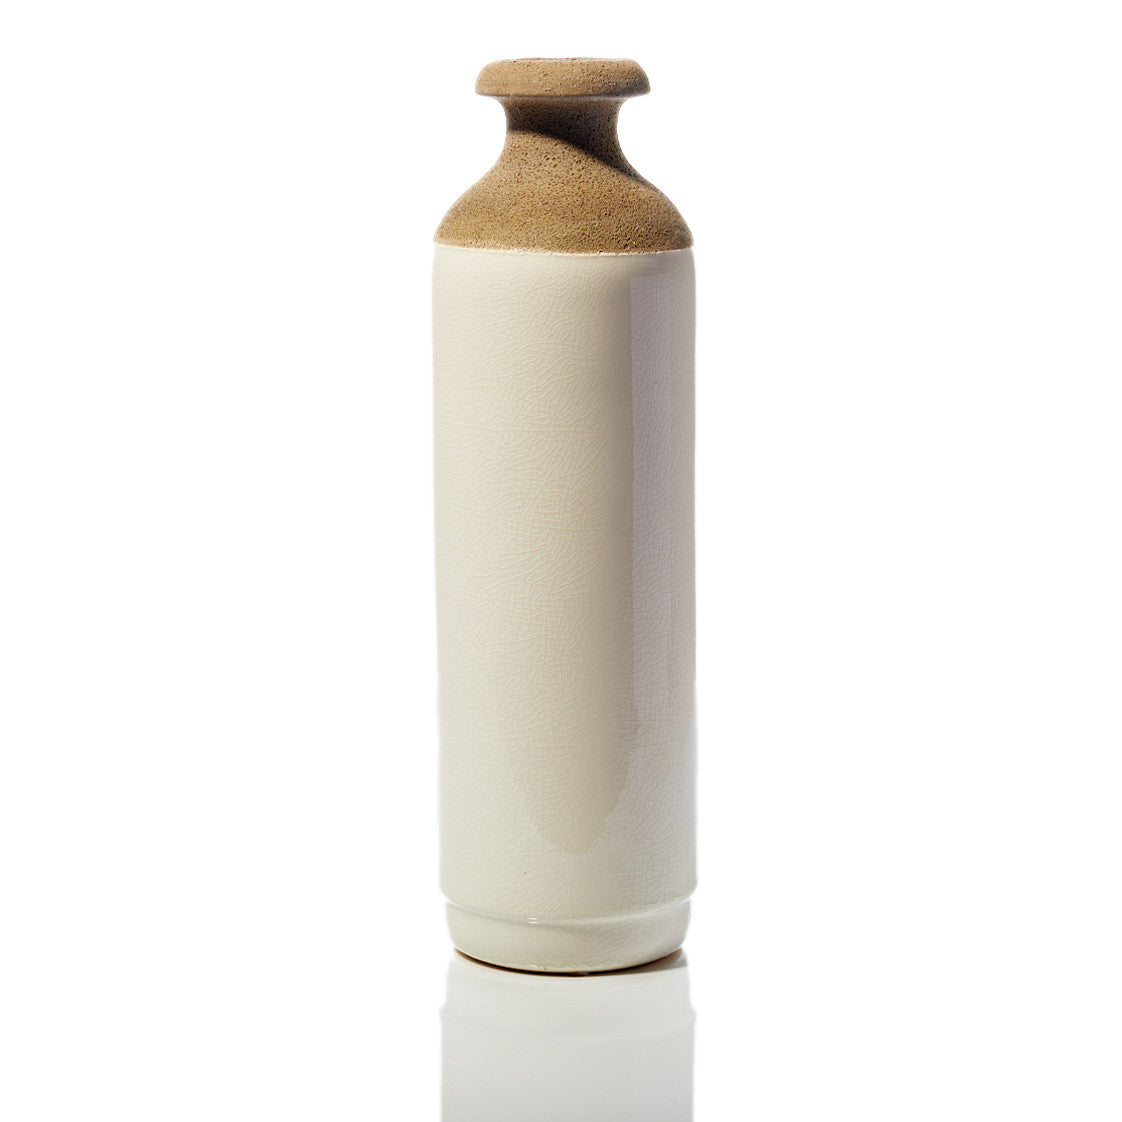 Tall Crackle Glaze Ceramic Natural Decorative Vase